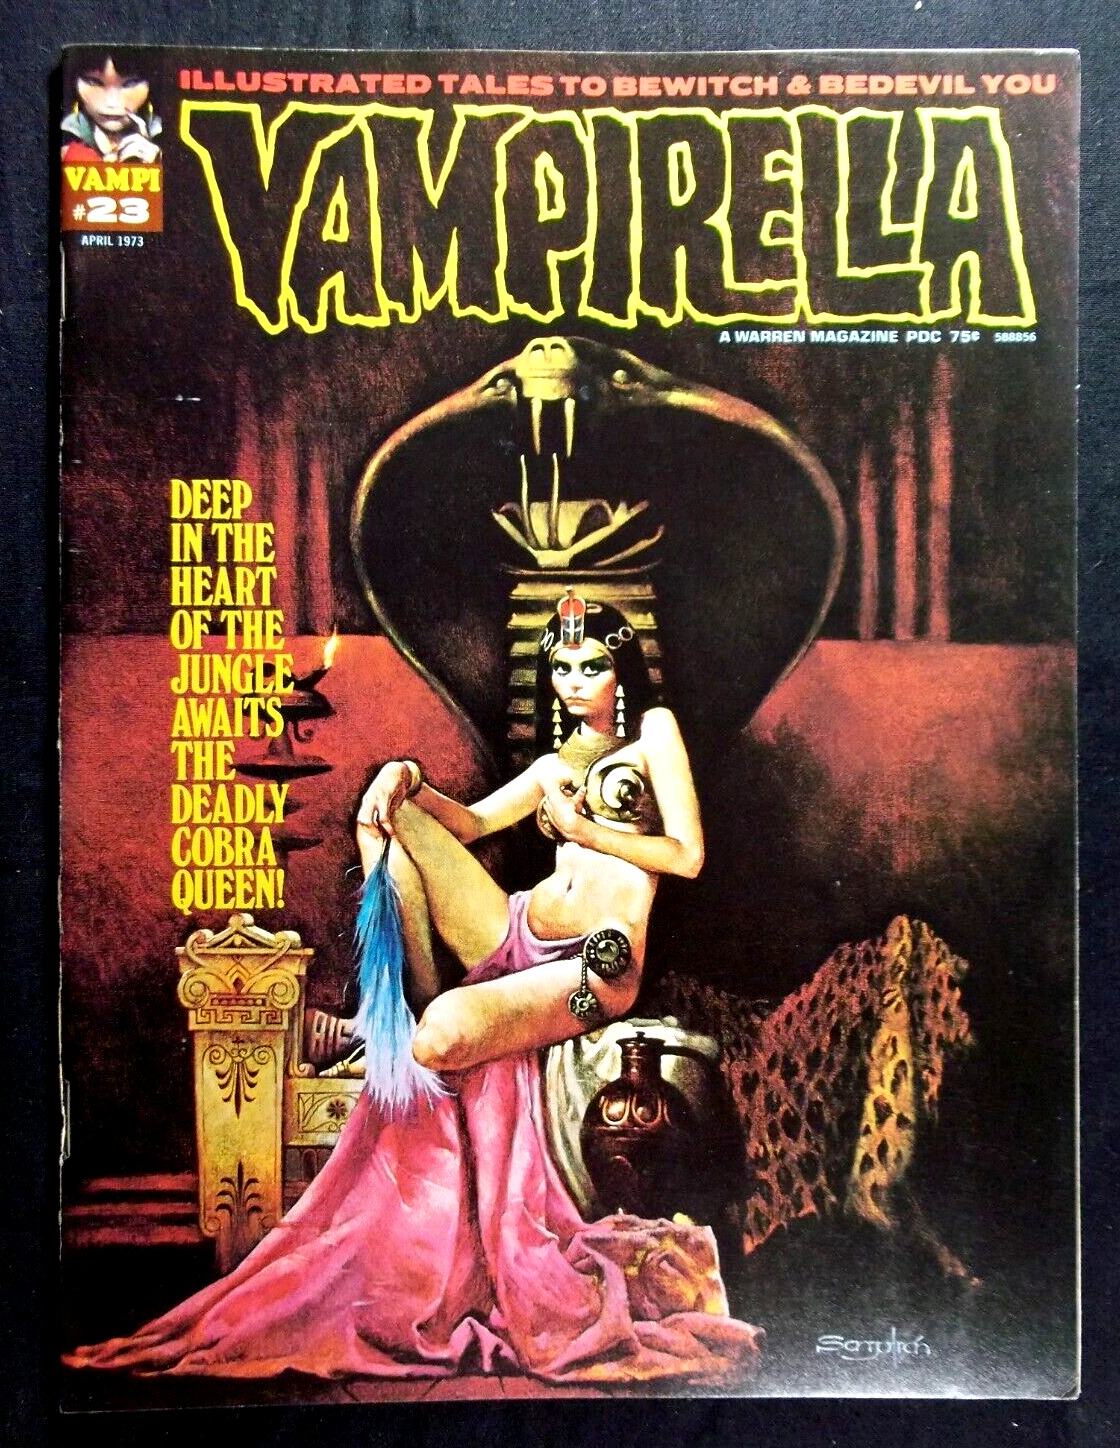 Vampirella #23 VF 7.5 Sanjulian Cover Art, Vintage Warren Magazine 1973